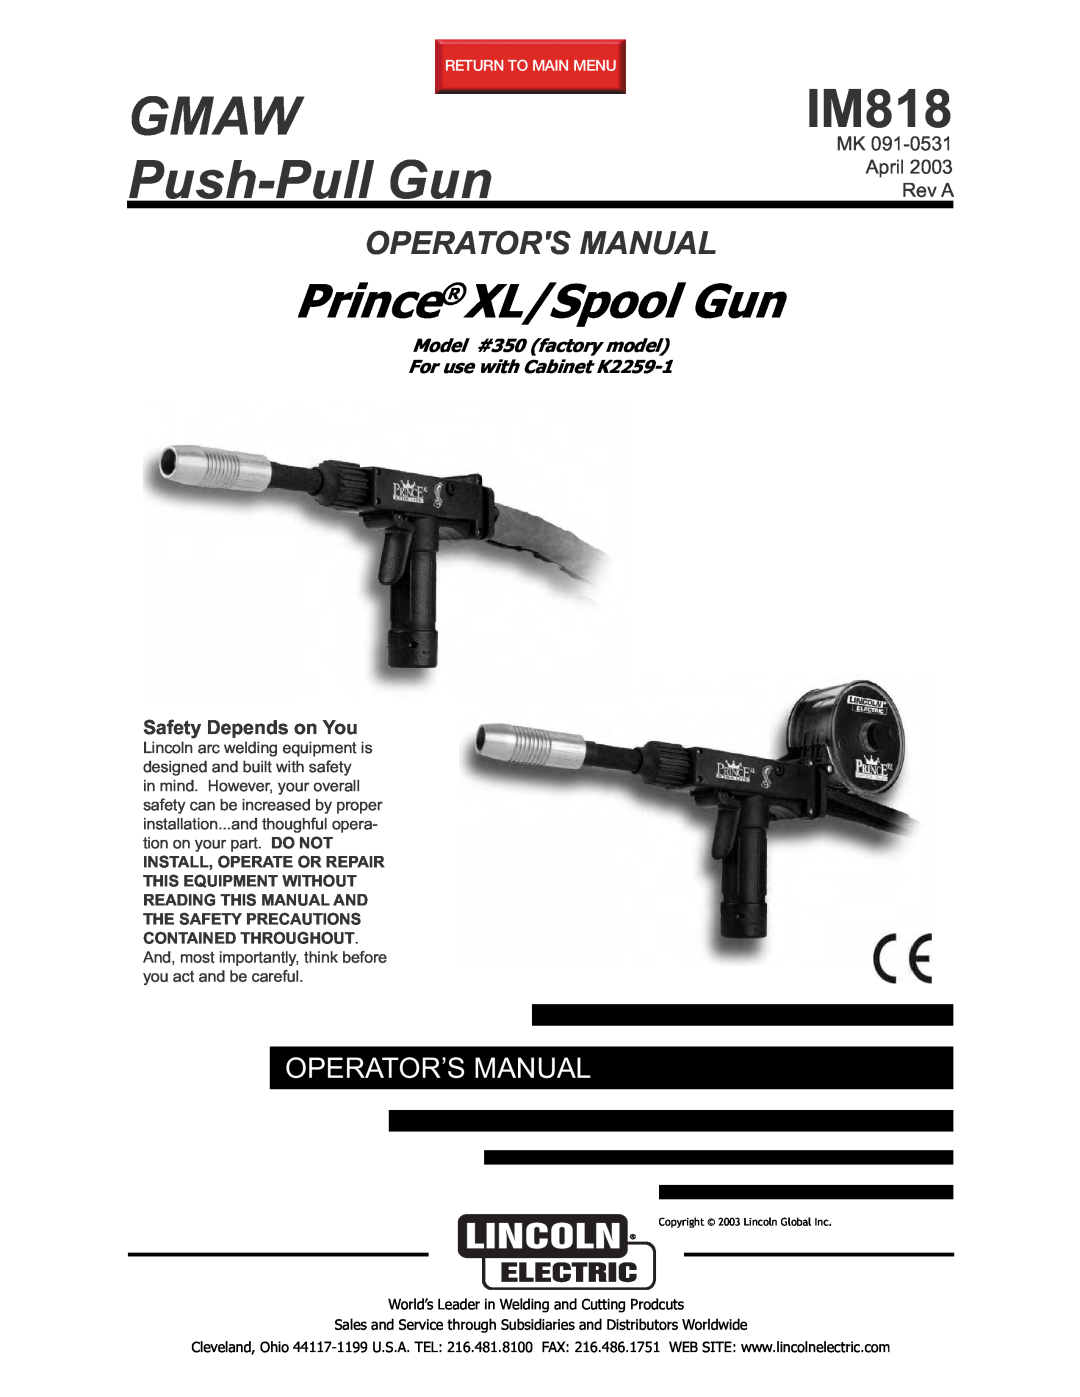 Lincoln Electric IM818 manual Lincoln, Electric, Gmaw, Push-PullGun, PrinceXL/Spool Gun, Operators Manual, April, Rev A 